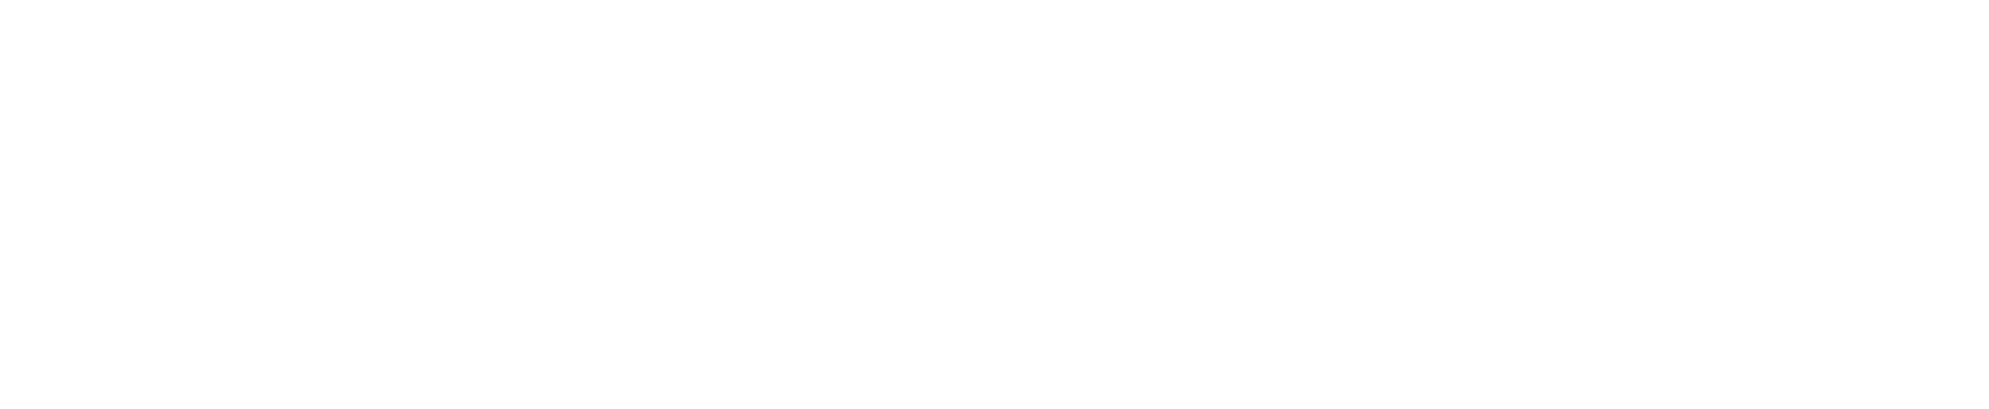 jenkinsx-horizontal-white.png